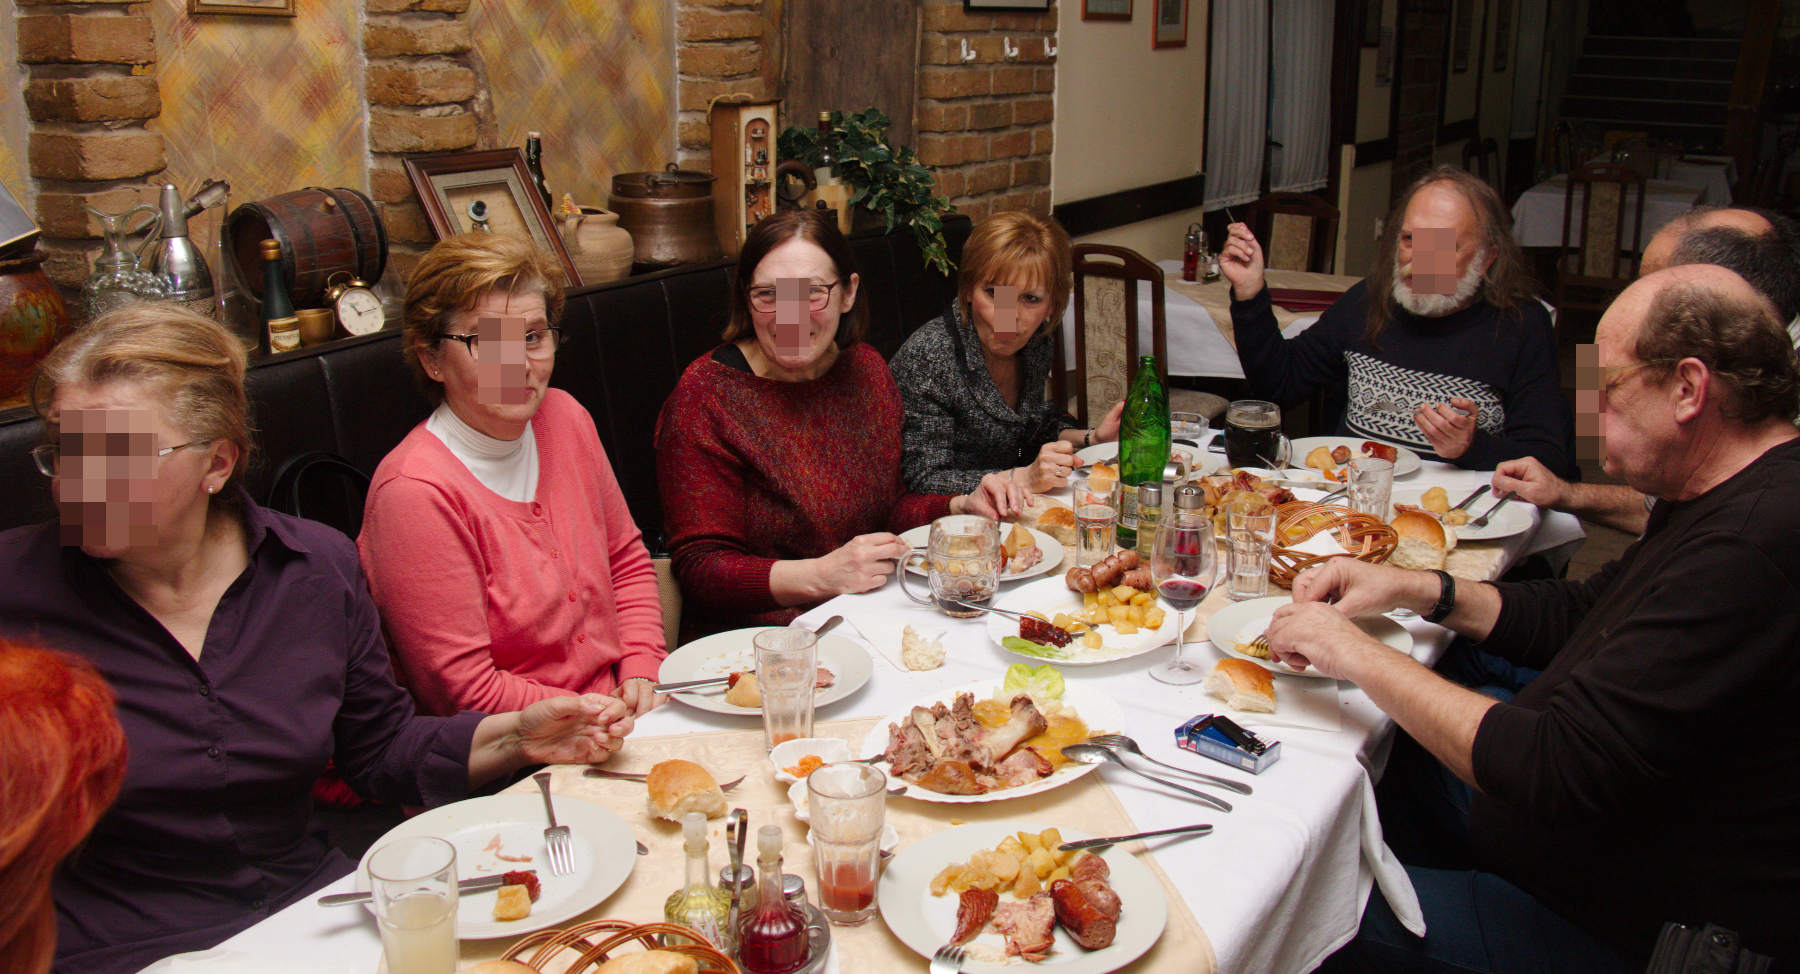 Milica, Mima, Bilja, Dragana, I, Staša (behind), Baki. The redhead bottom left belongs to Savka.